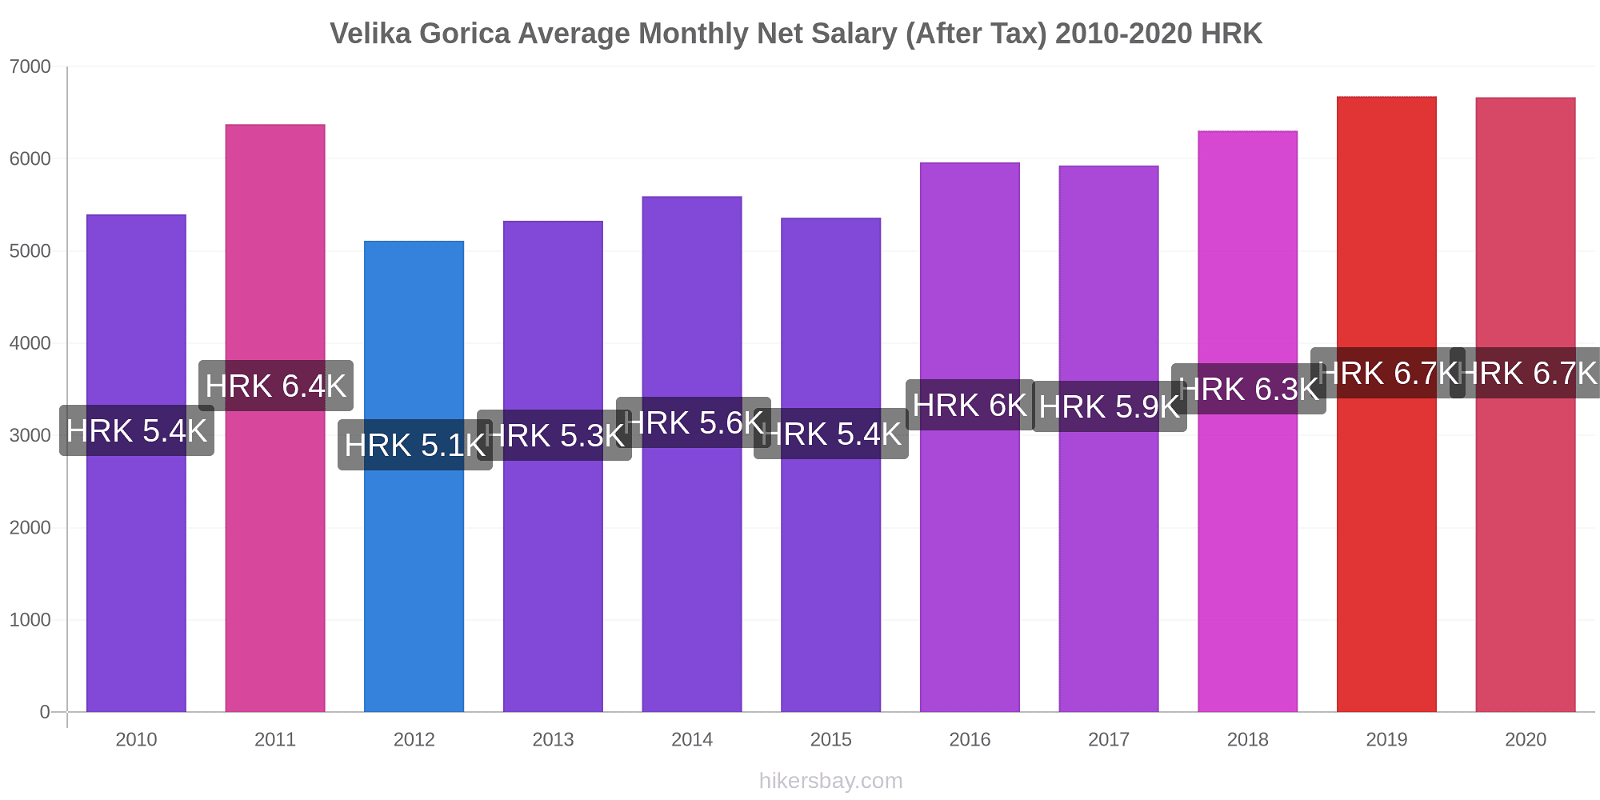 Velika Gorica price changes Average Monthly Net Salary (After Tax) hikersbay.com